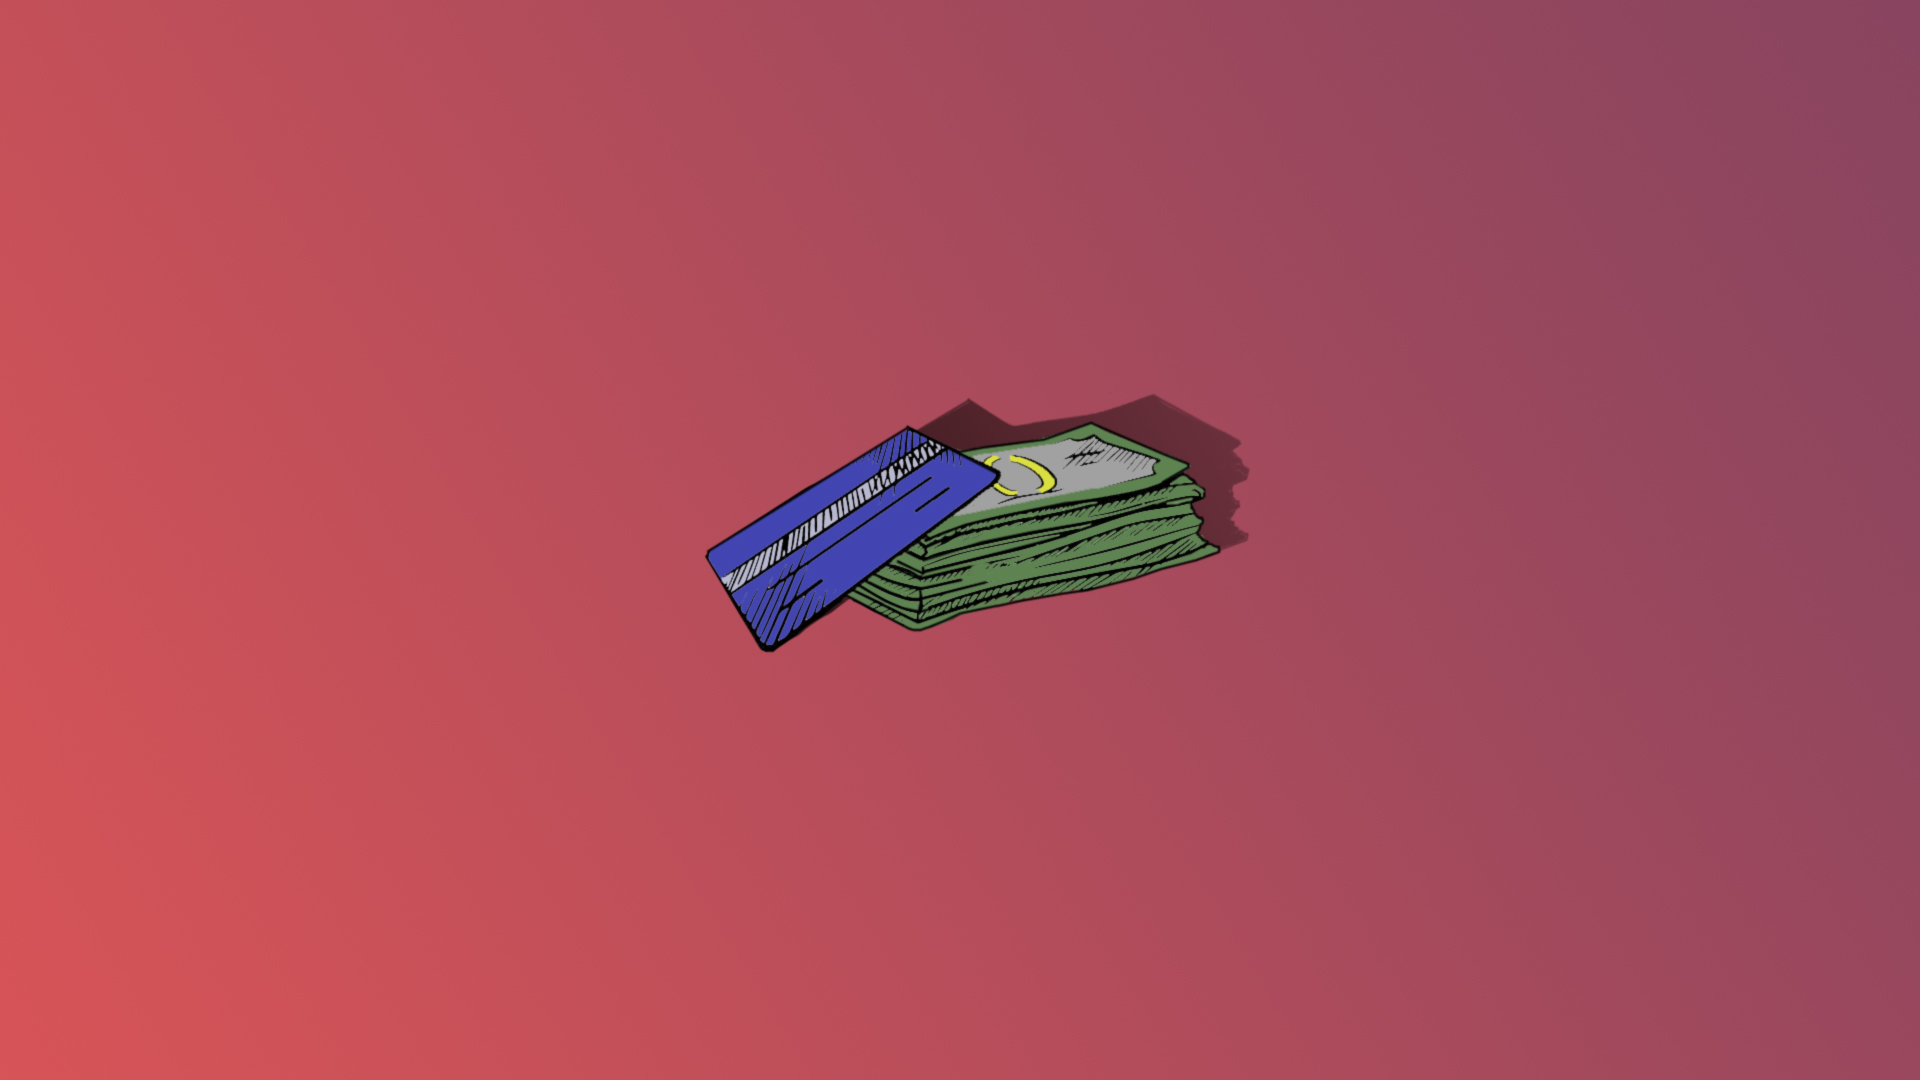 General 1920x1080 cash credit cards photoshopped minimalism simple background money